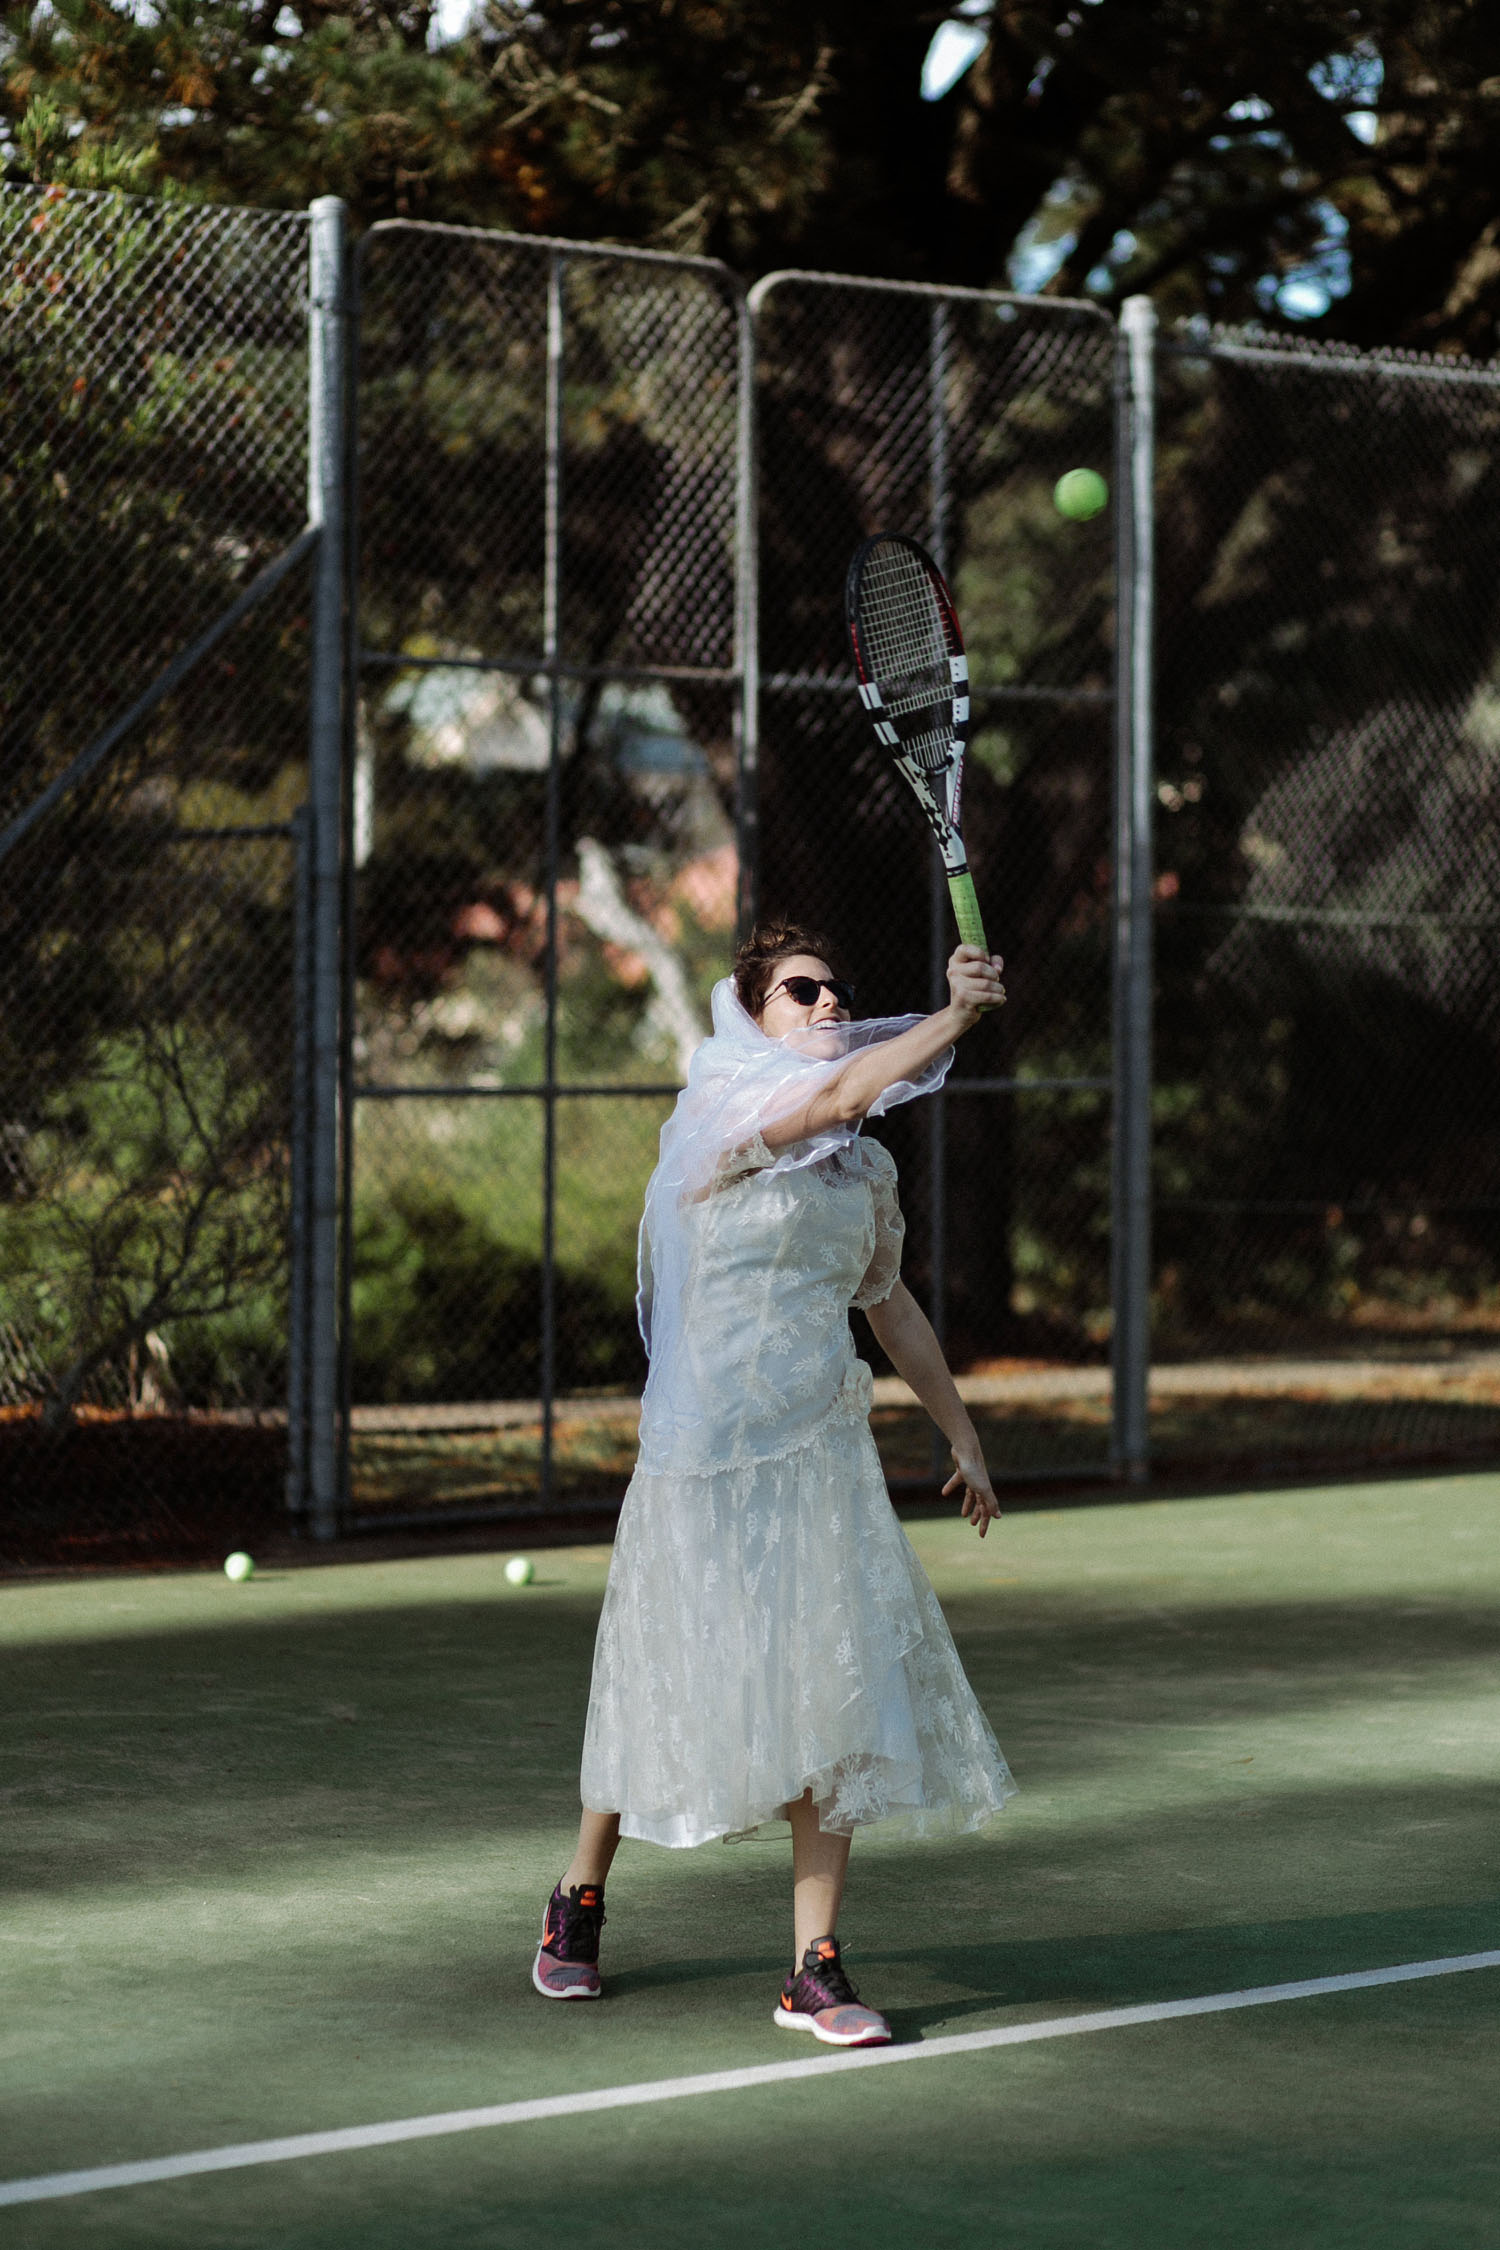 bride vintage wedding dress playing tennis